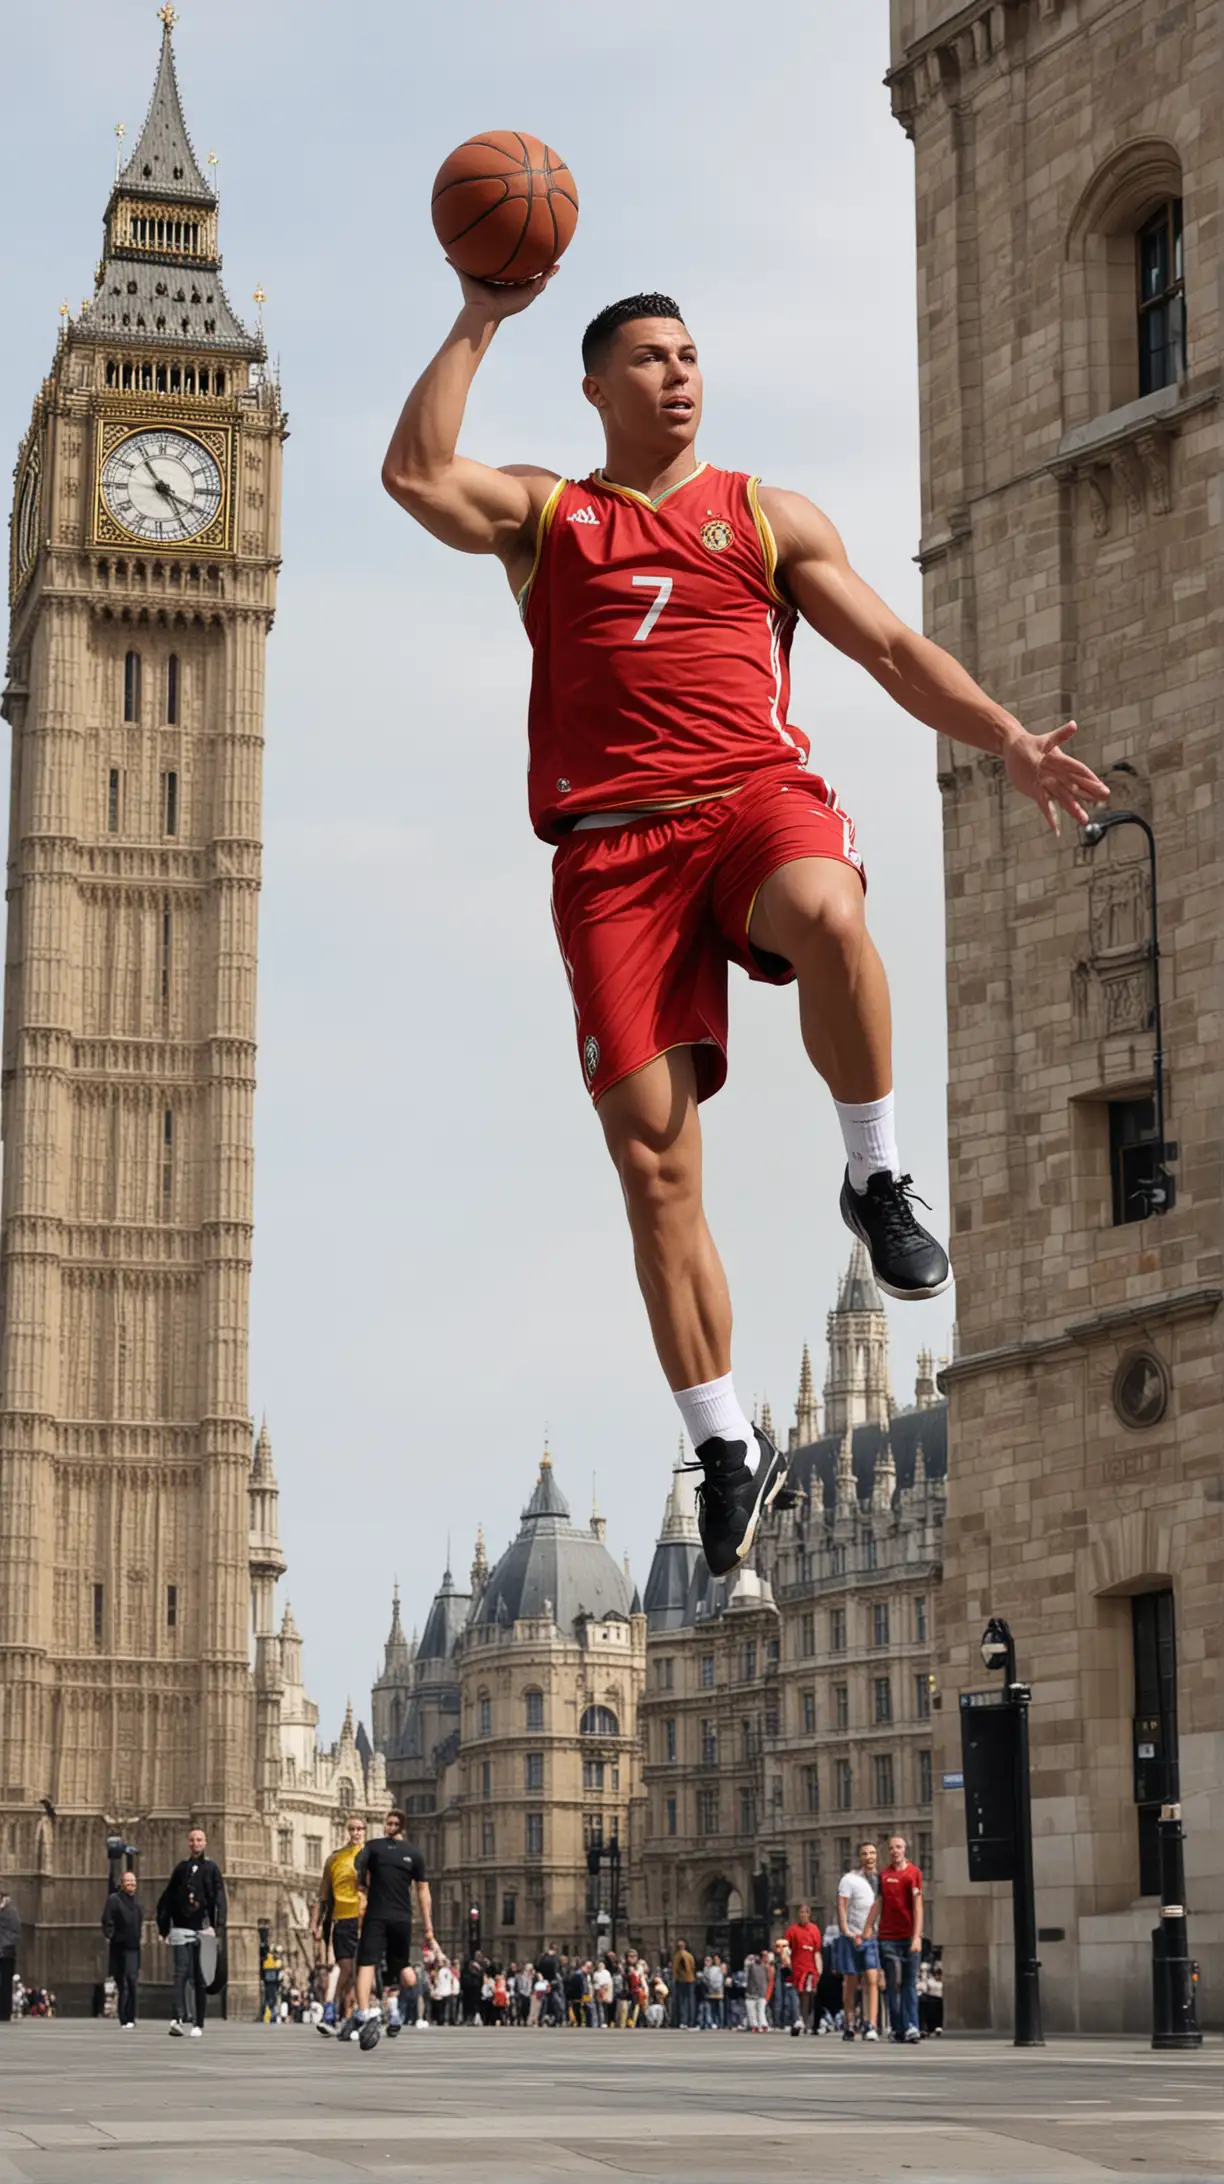 Cristiano Ronaldo Playing Basketball by Big Ben in London